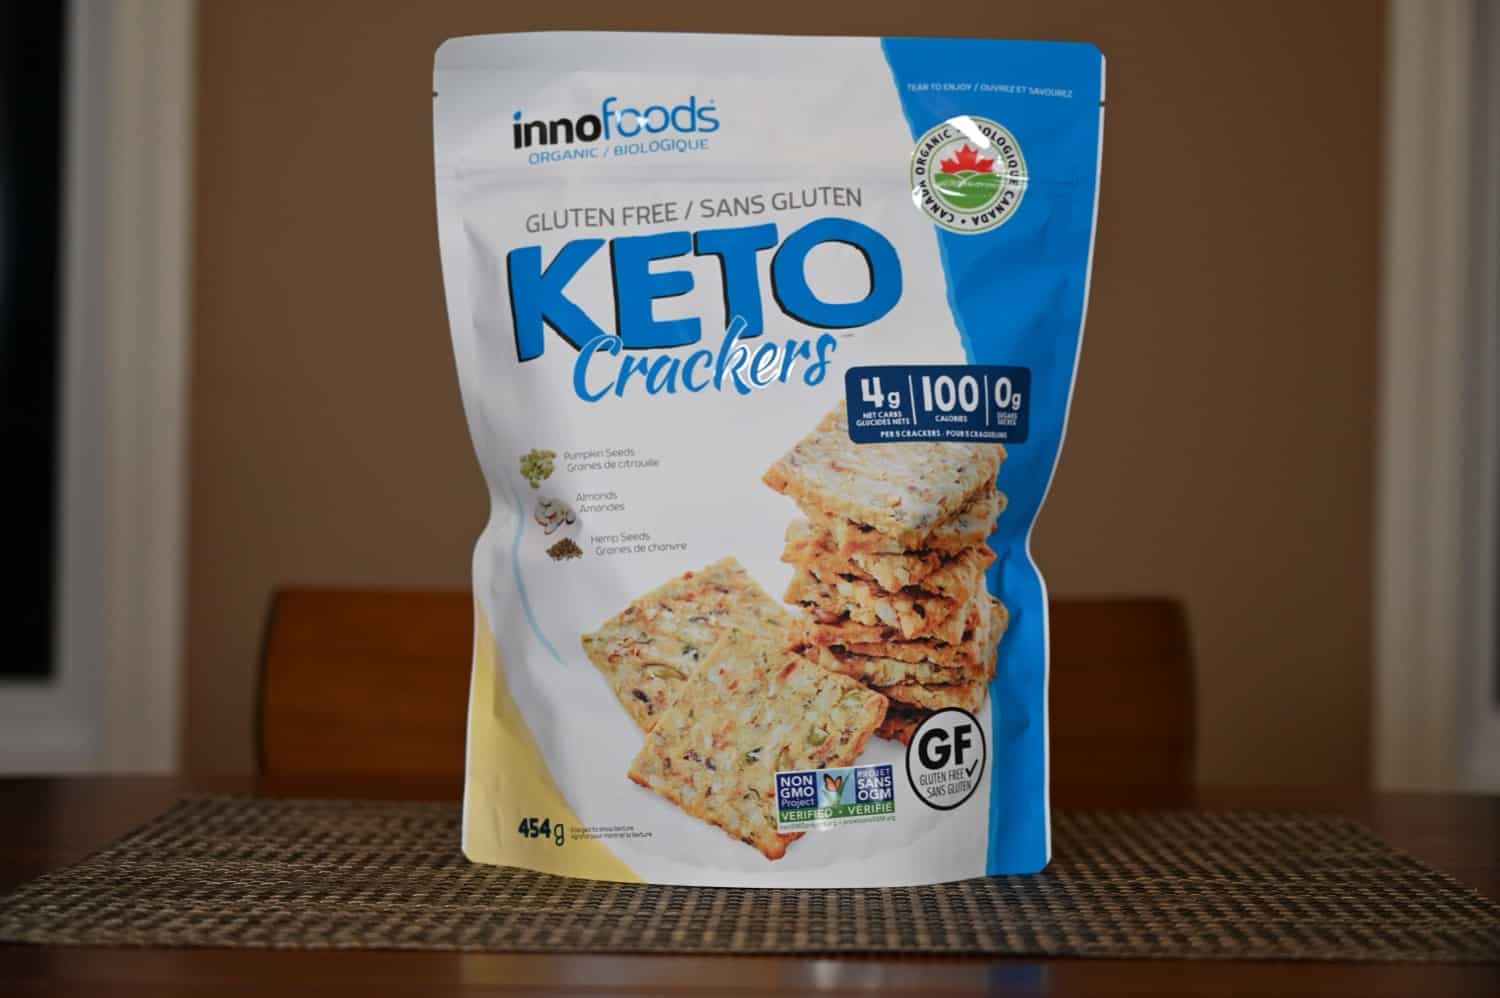 The innofoods Keto Crackers.